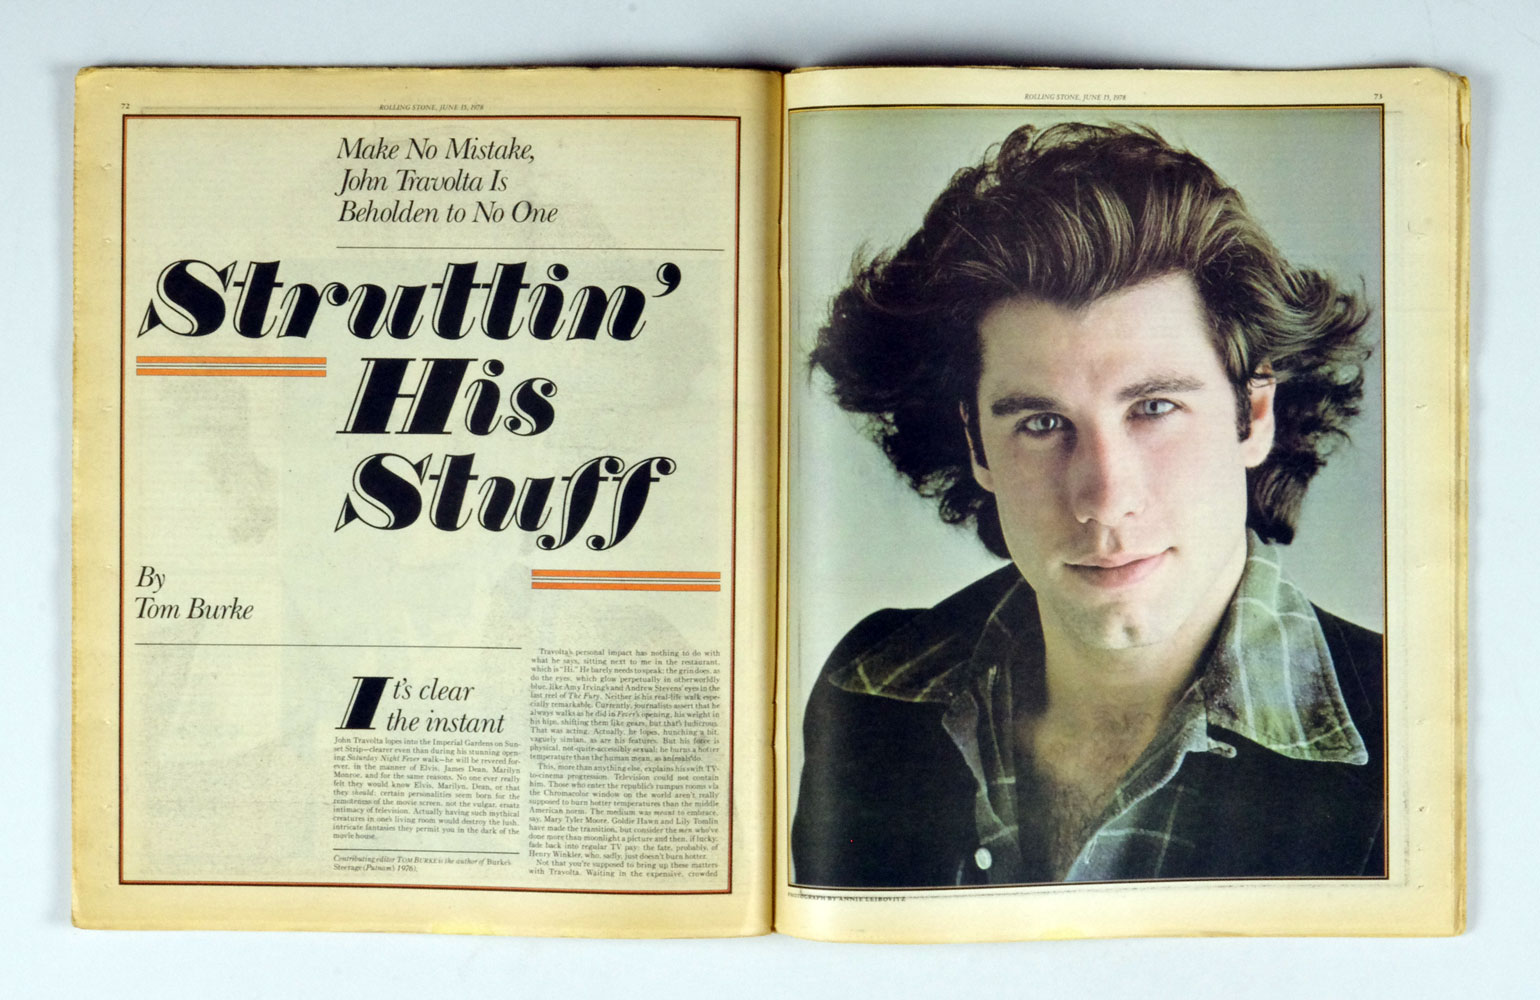 Rolling Stone Magazine Back Issue 1978 Jun 15 No. 267 John Travolta 